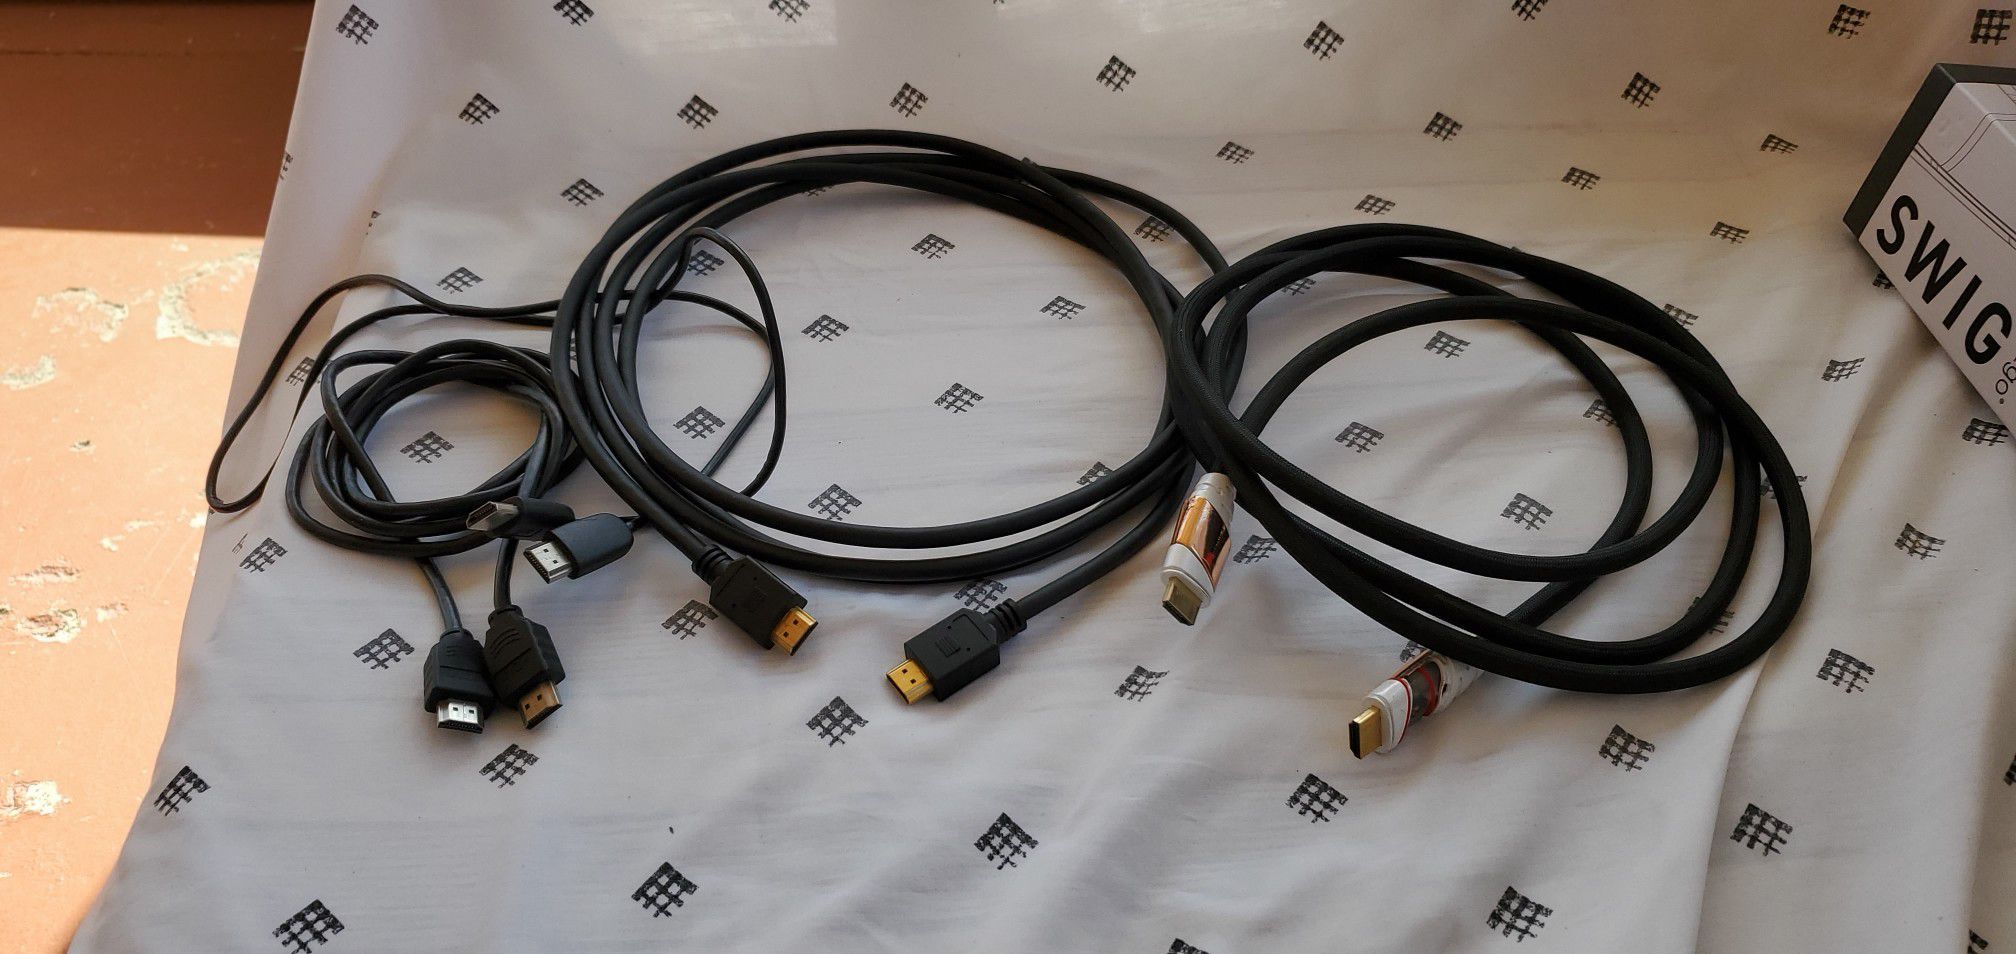 4 hdmi cables